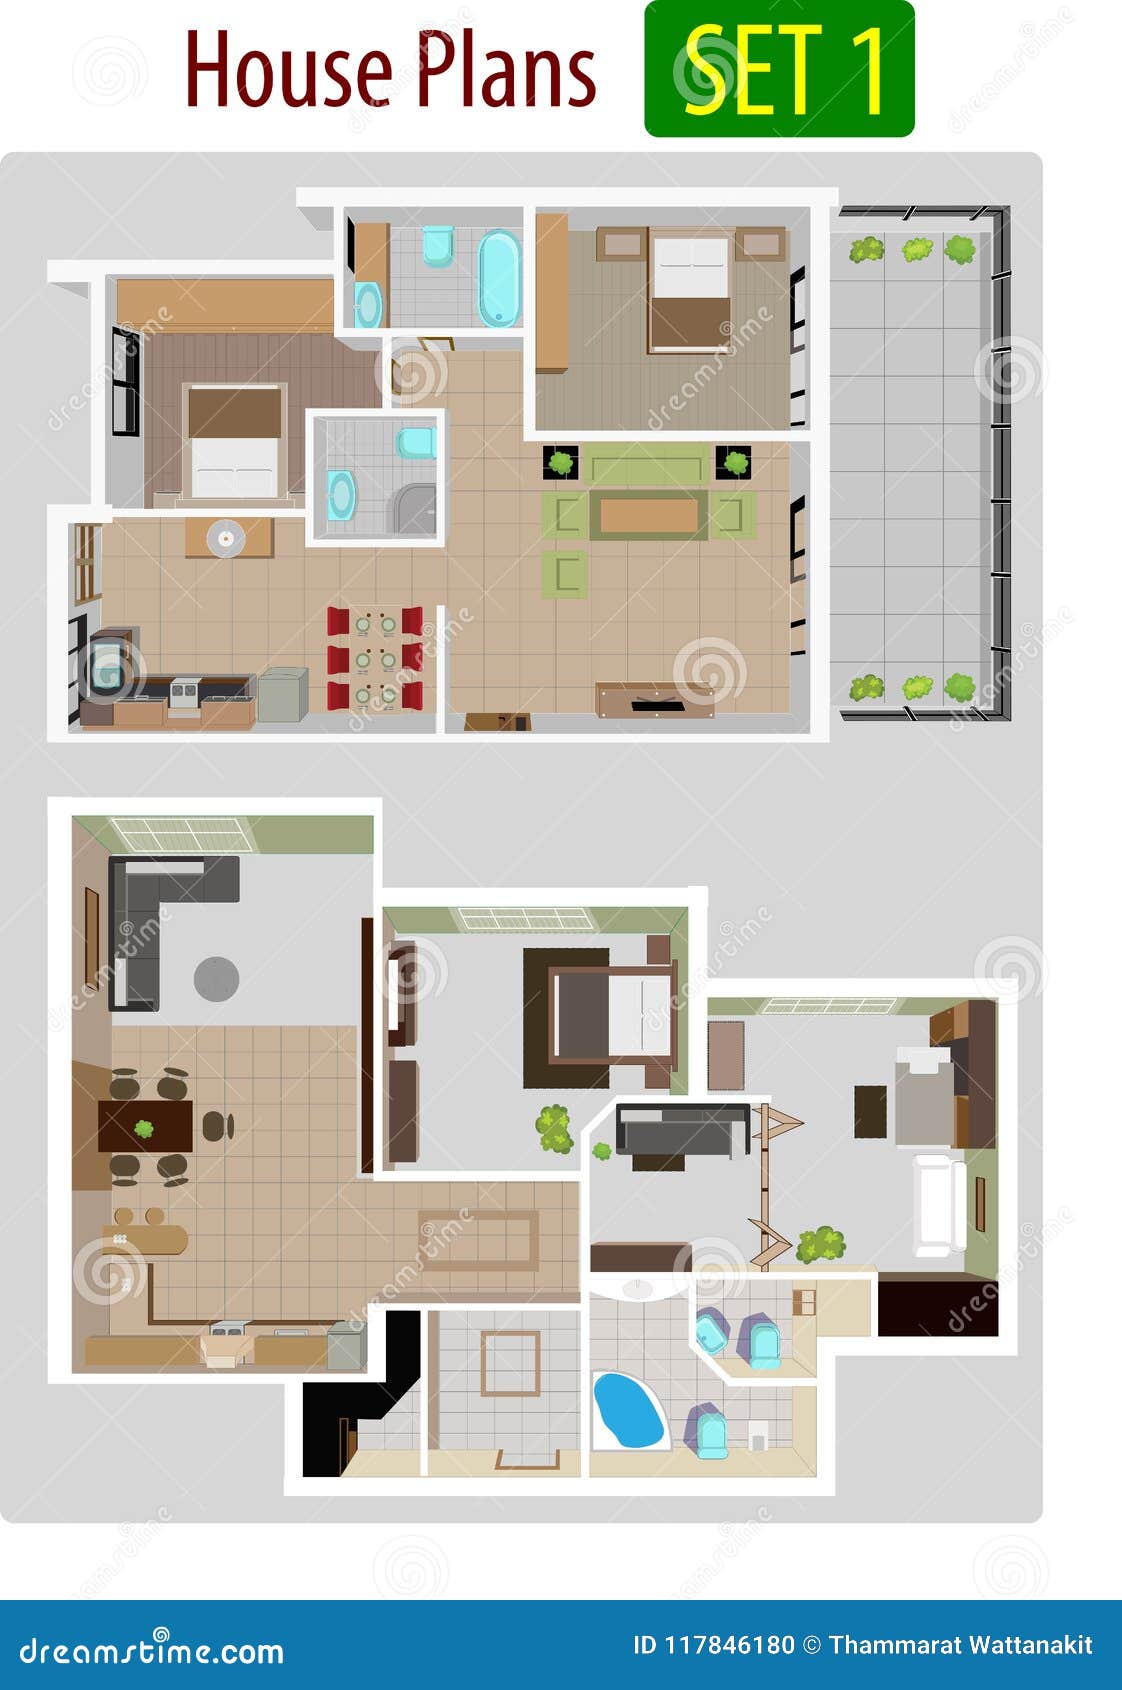 Vector Illustration of House Plan Version 1. Stock Illustration